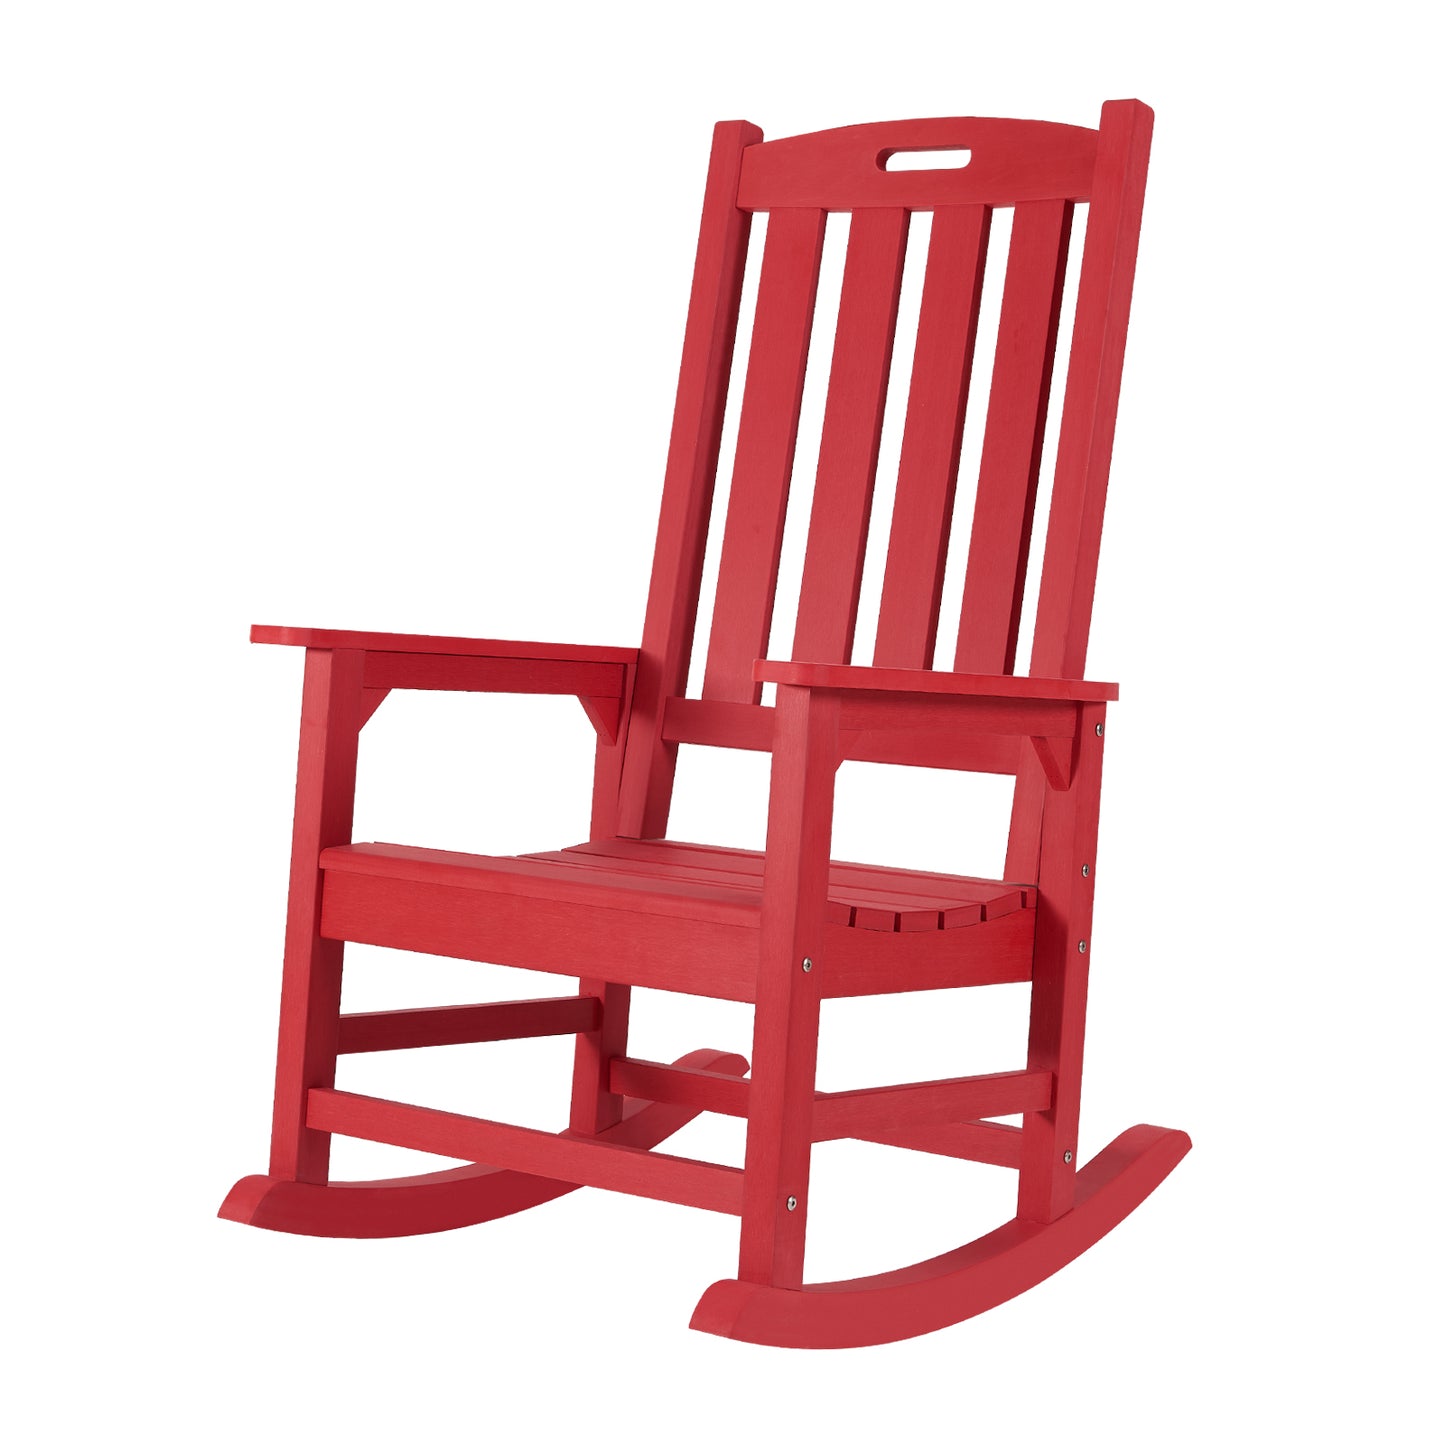 Psilvam Patio Rocking Chairs